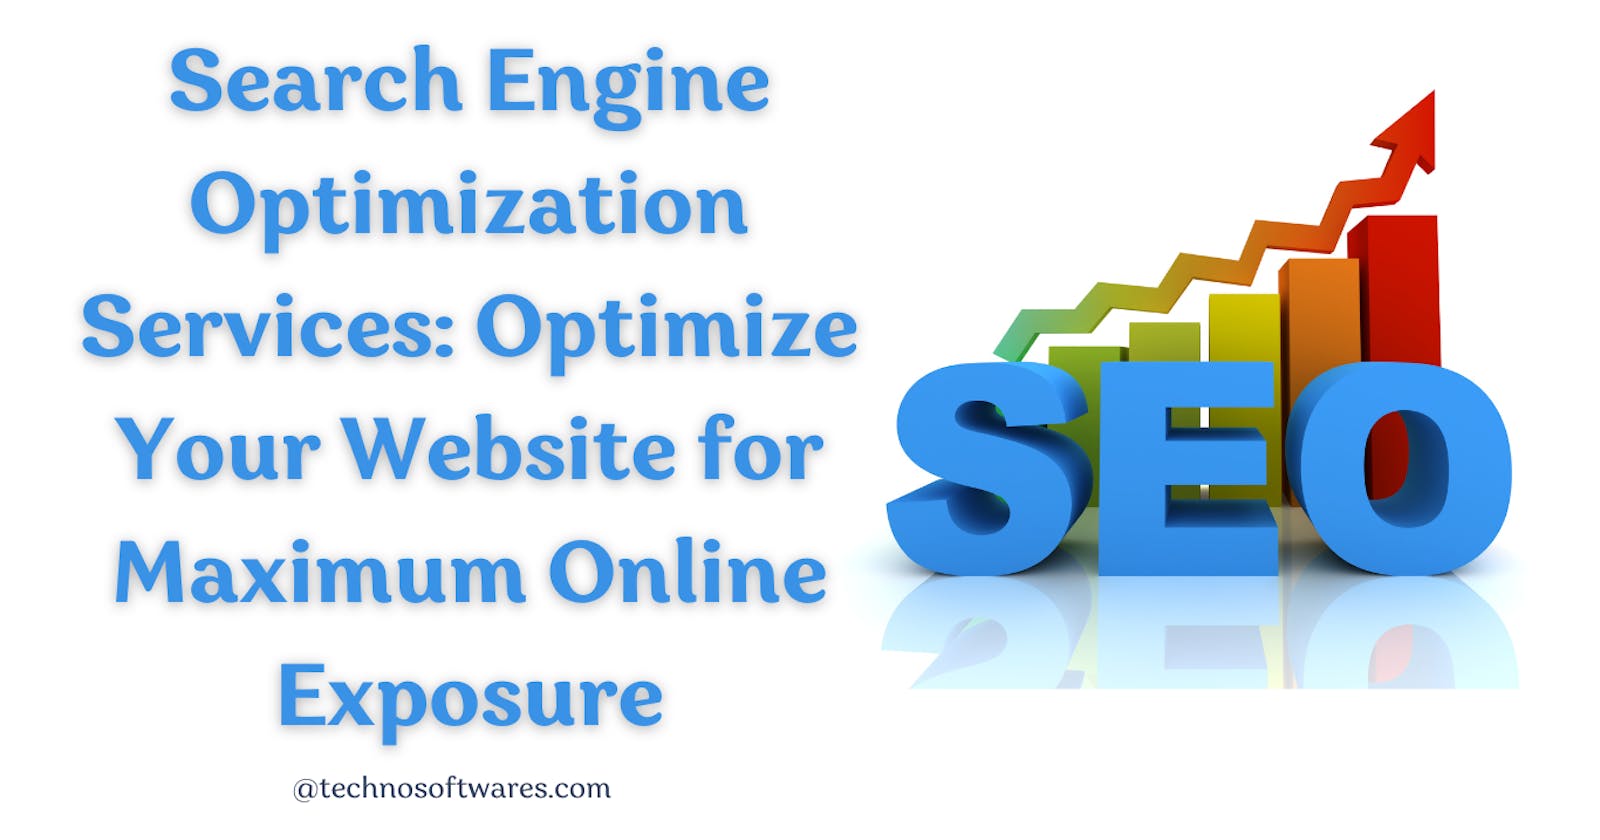 Search Engine Optimization Services: Optimize Your Website for Maximum Online Exposure